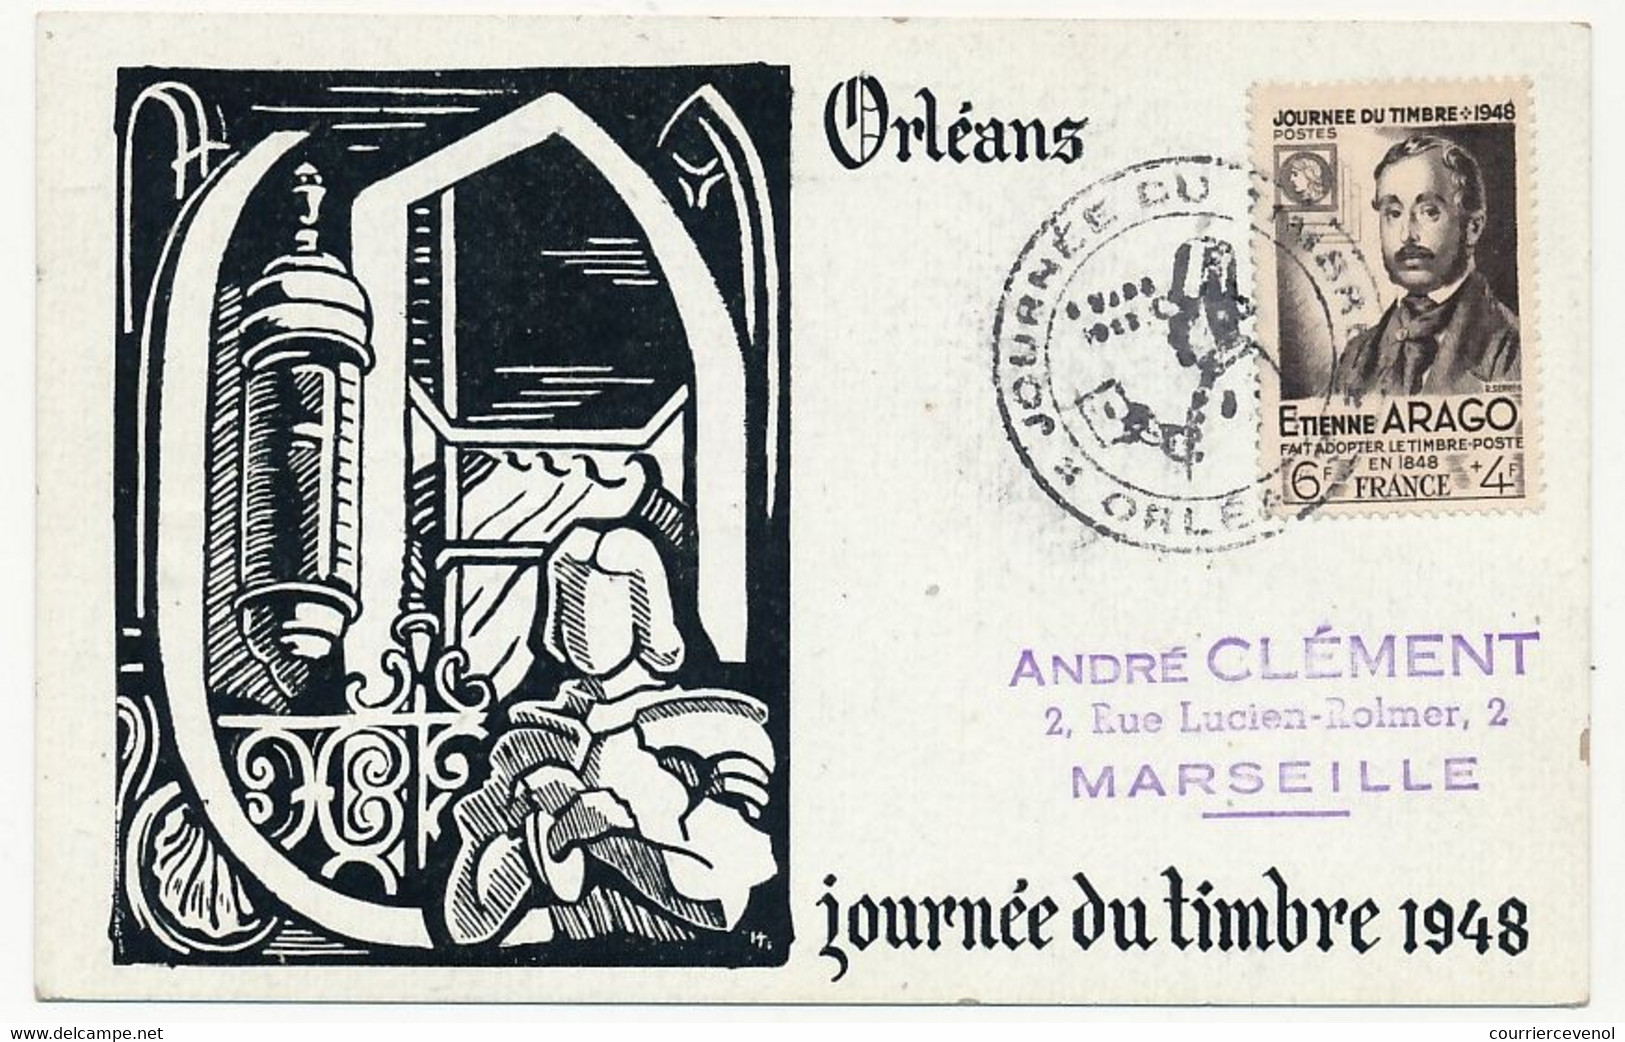 FRANCE => Carte Locale "Journée Du Timbre" 1948 - Timbre 6F + 4F Etienne Arago - ORLEANS 8.3.1948 - Tag Der Briefmarke